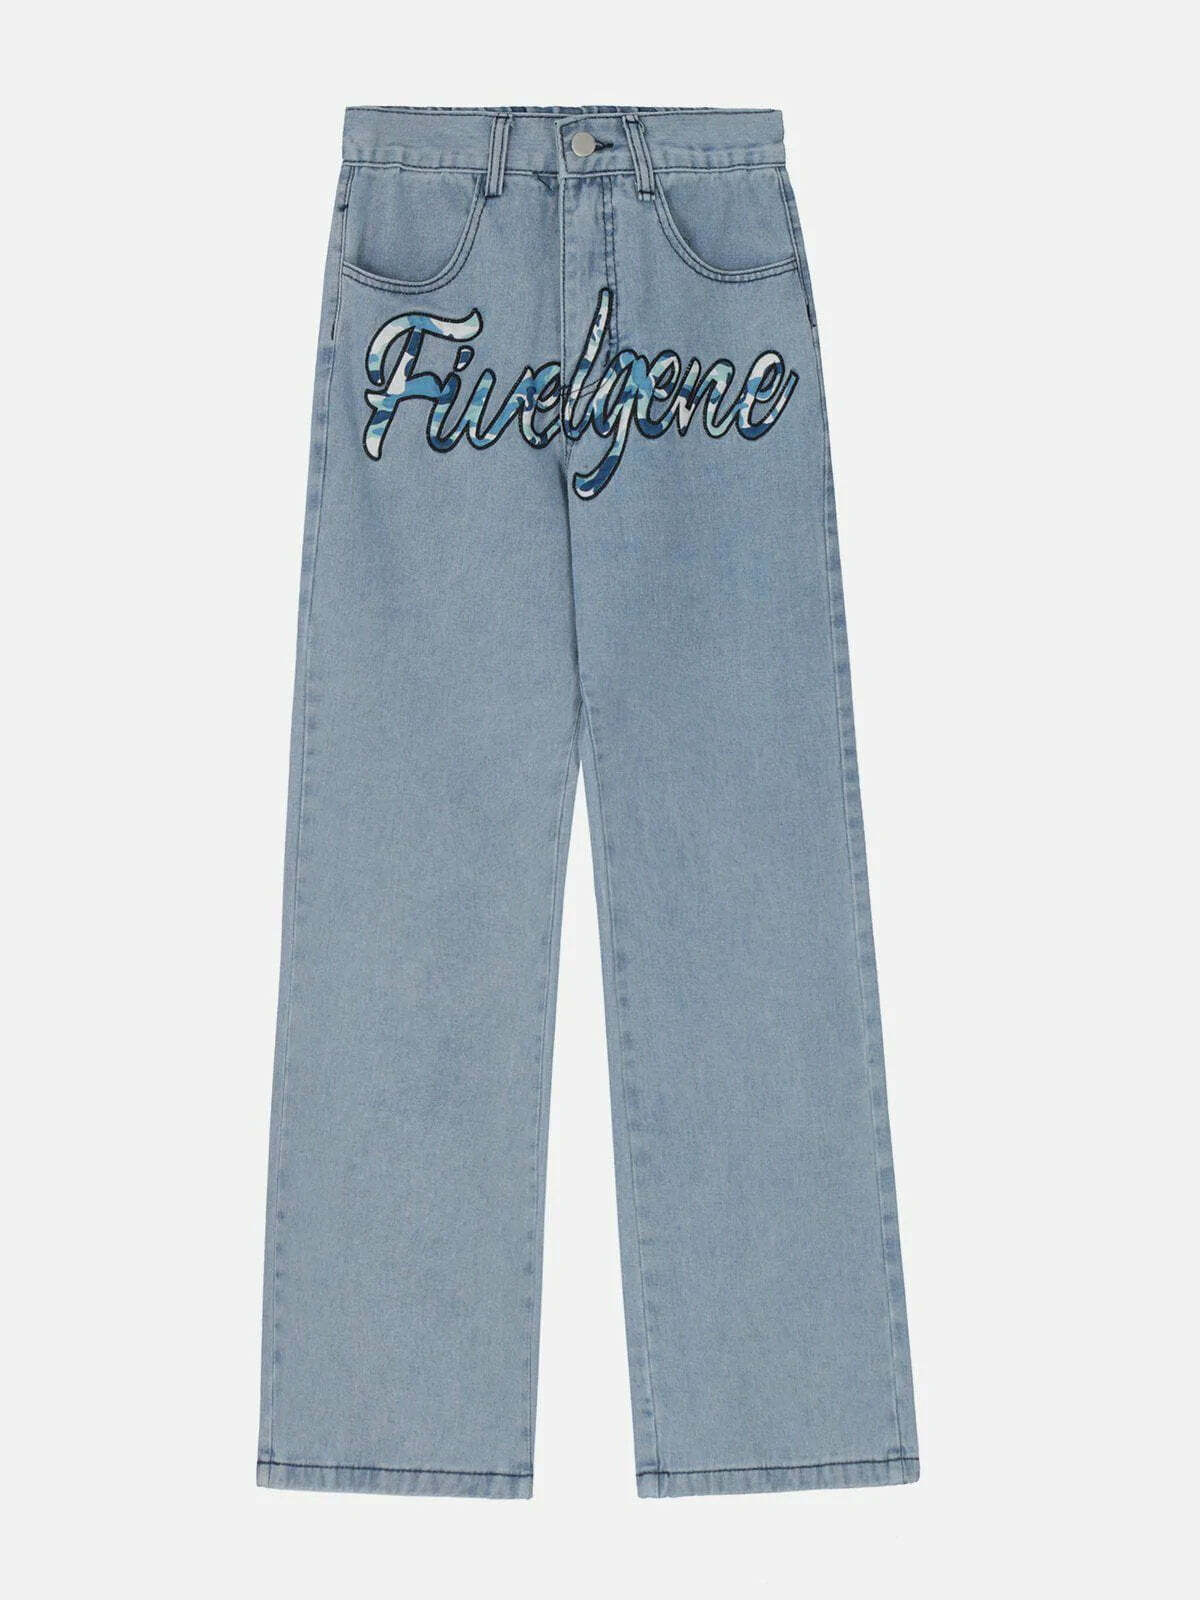 camo print elastic jeans edgy & versatile streetwear 1852